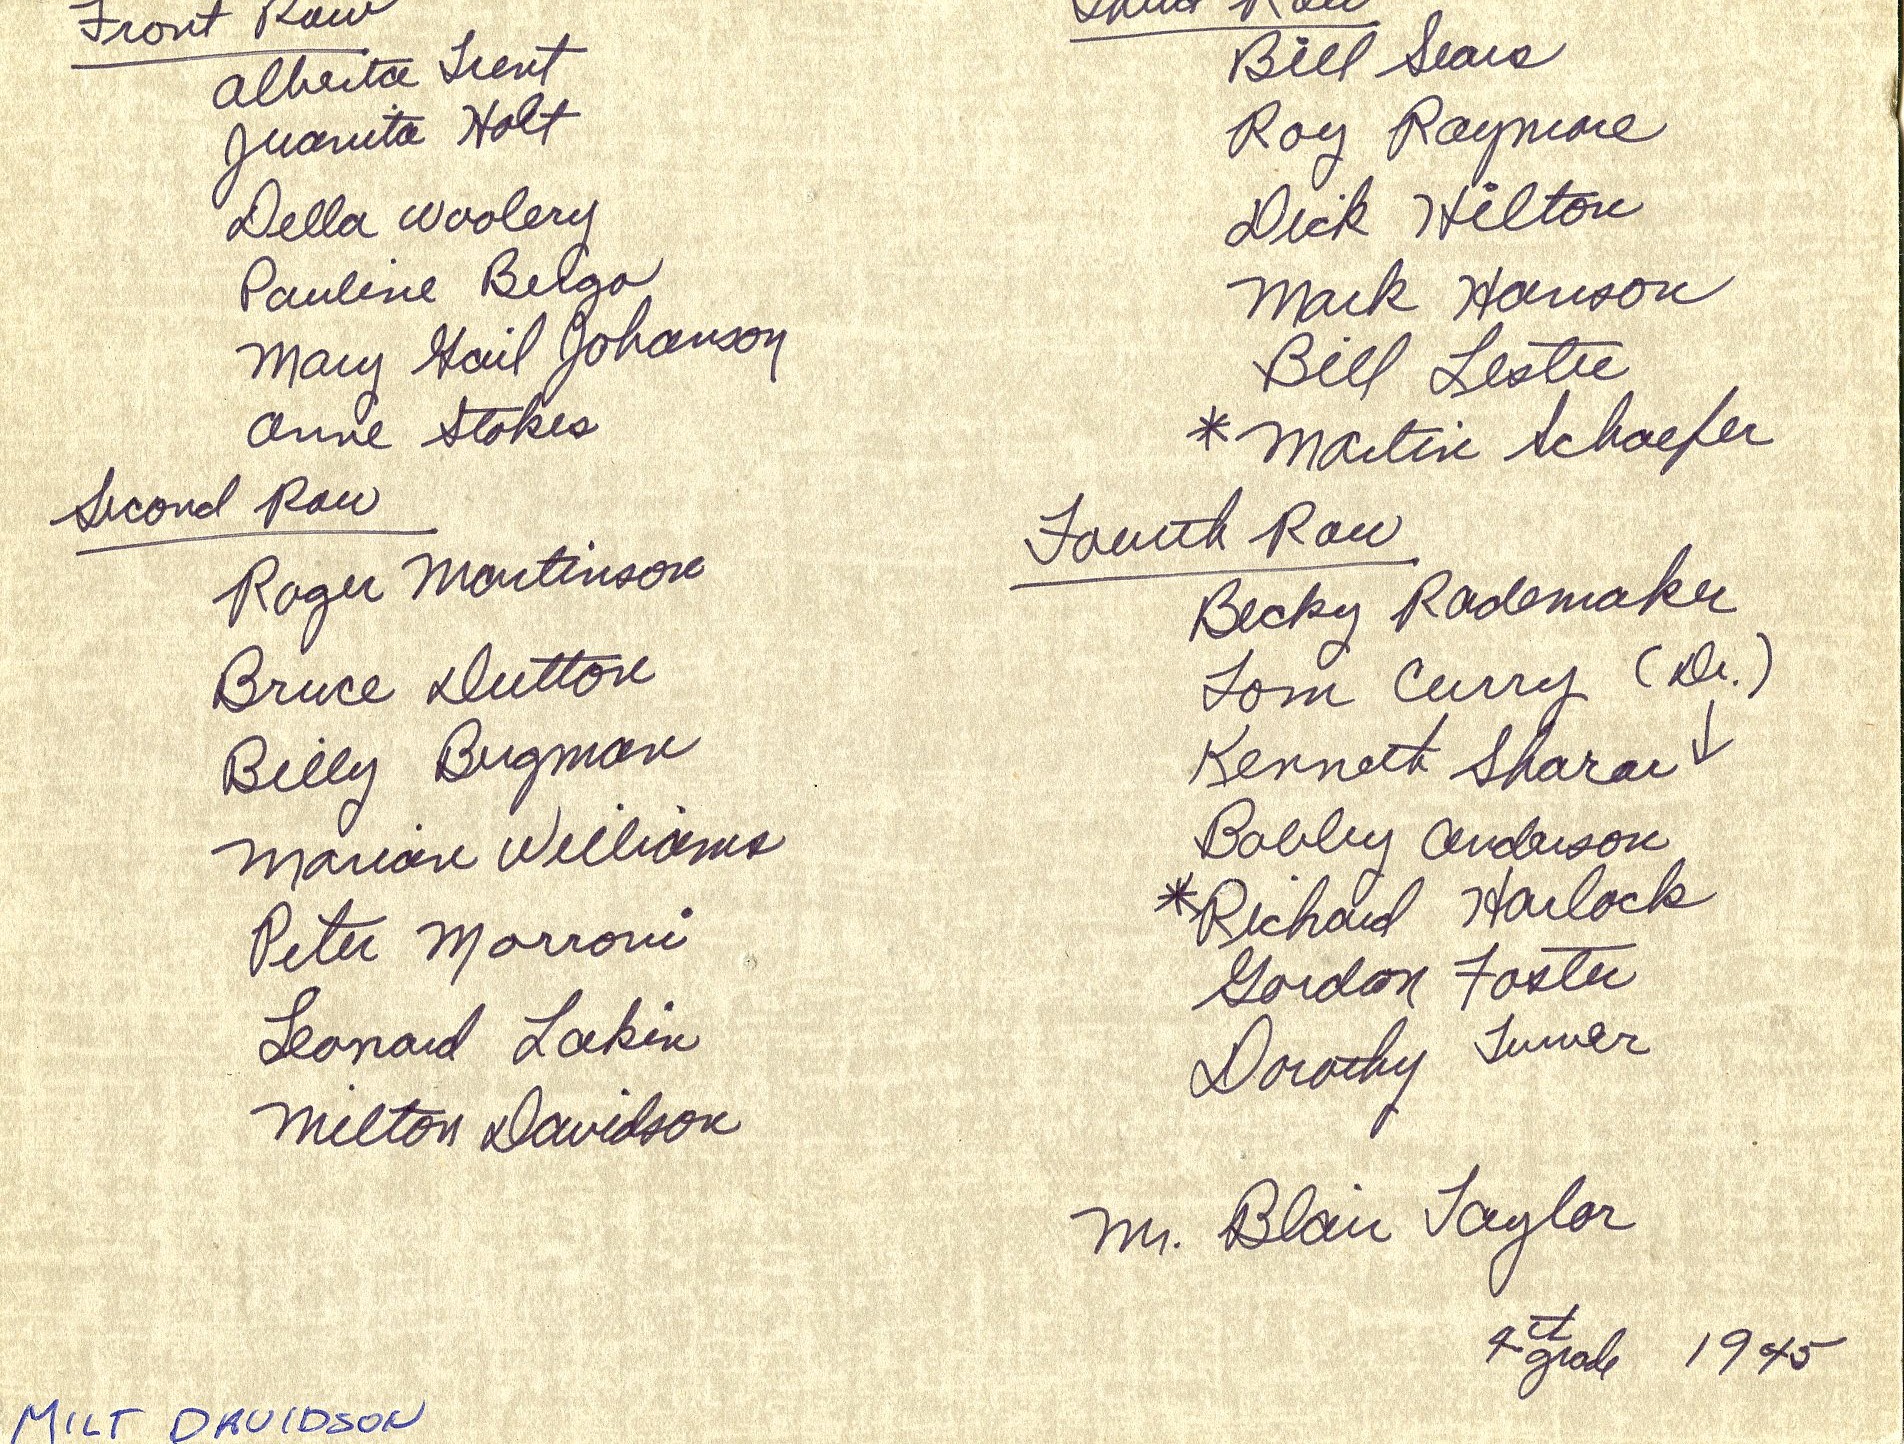 1945 4th names